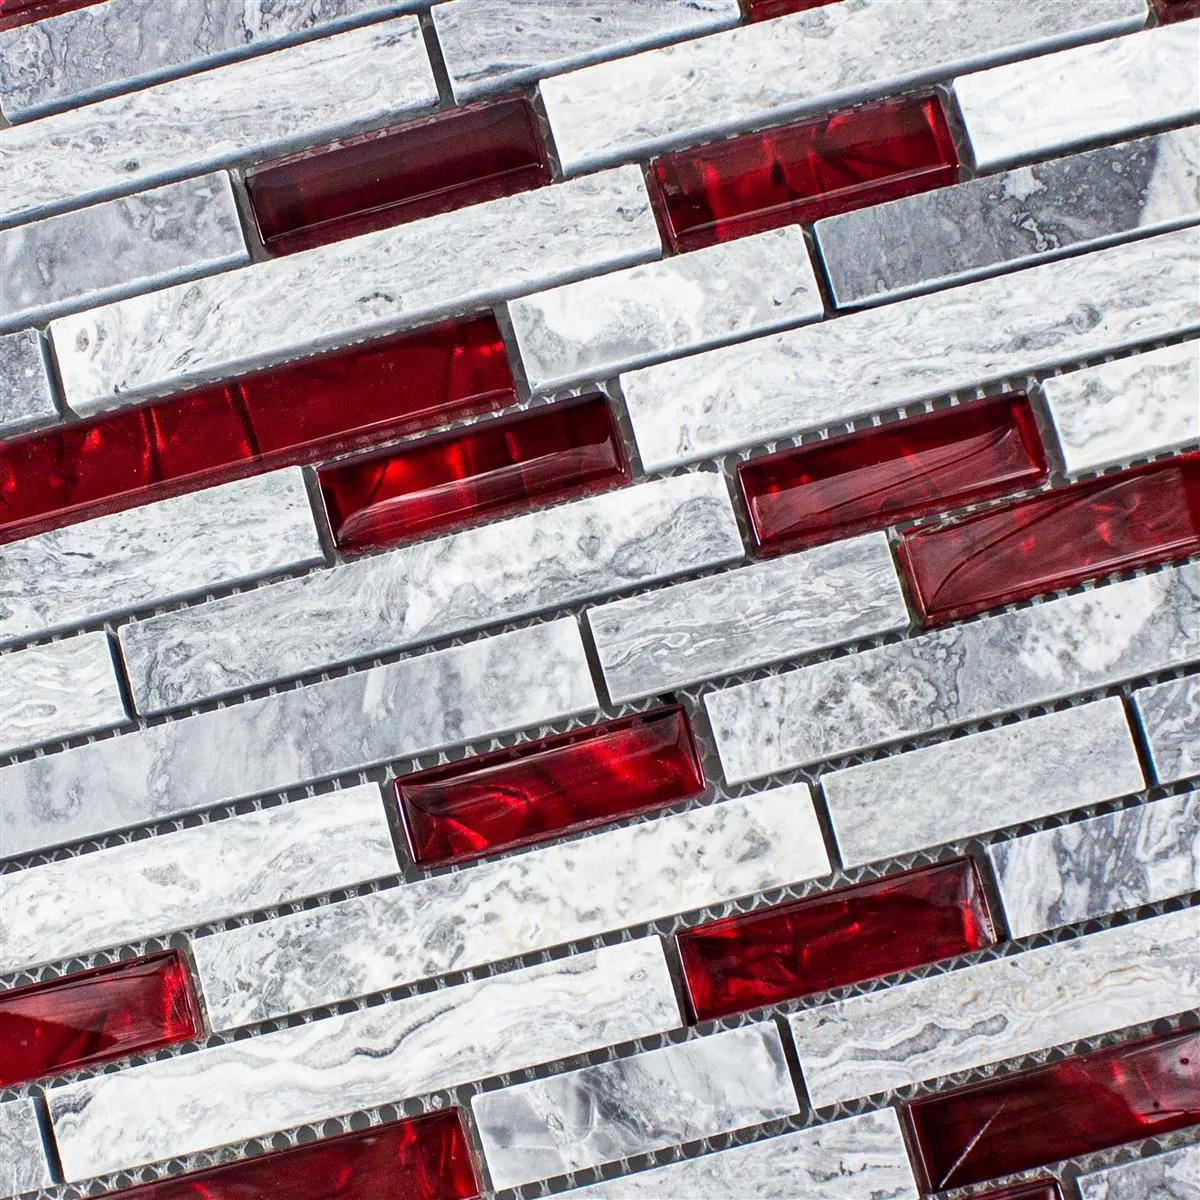 Mosaico de Pedra Natural de Vidro Azulejos Sinop Cinza Vermelho Brick